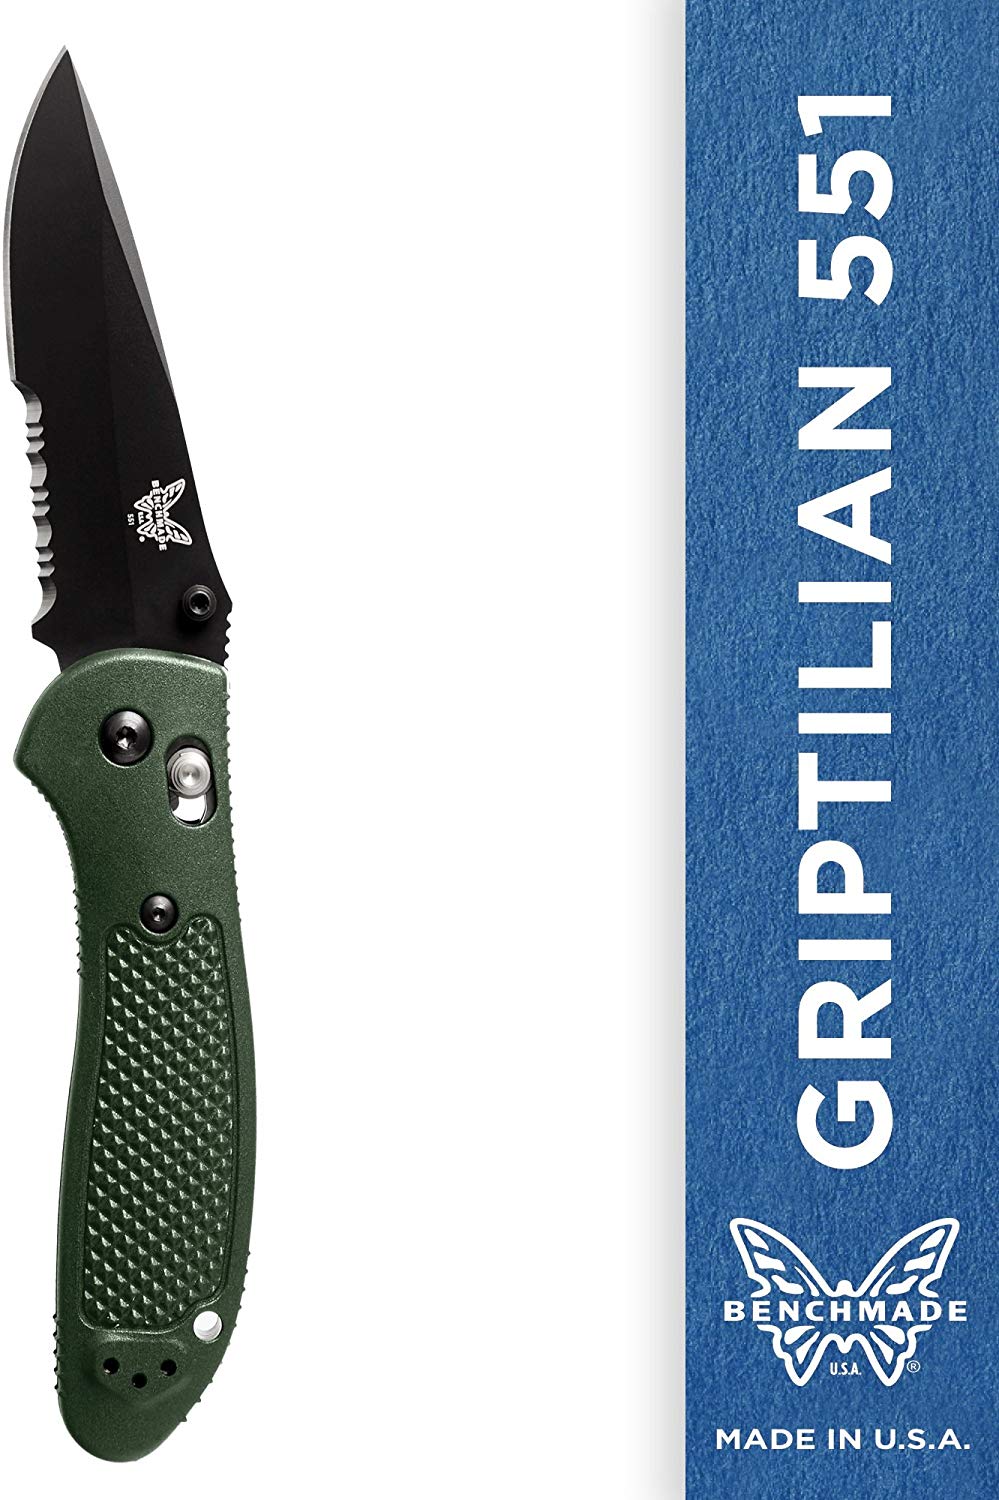 Benchmade - Griptilian 551 Knife - Drop-Point Blade - Serrated Edge - Coated Finish - Olive Handle